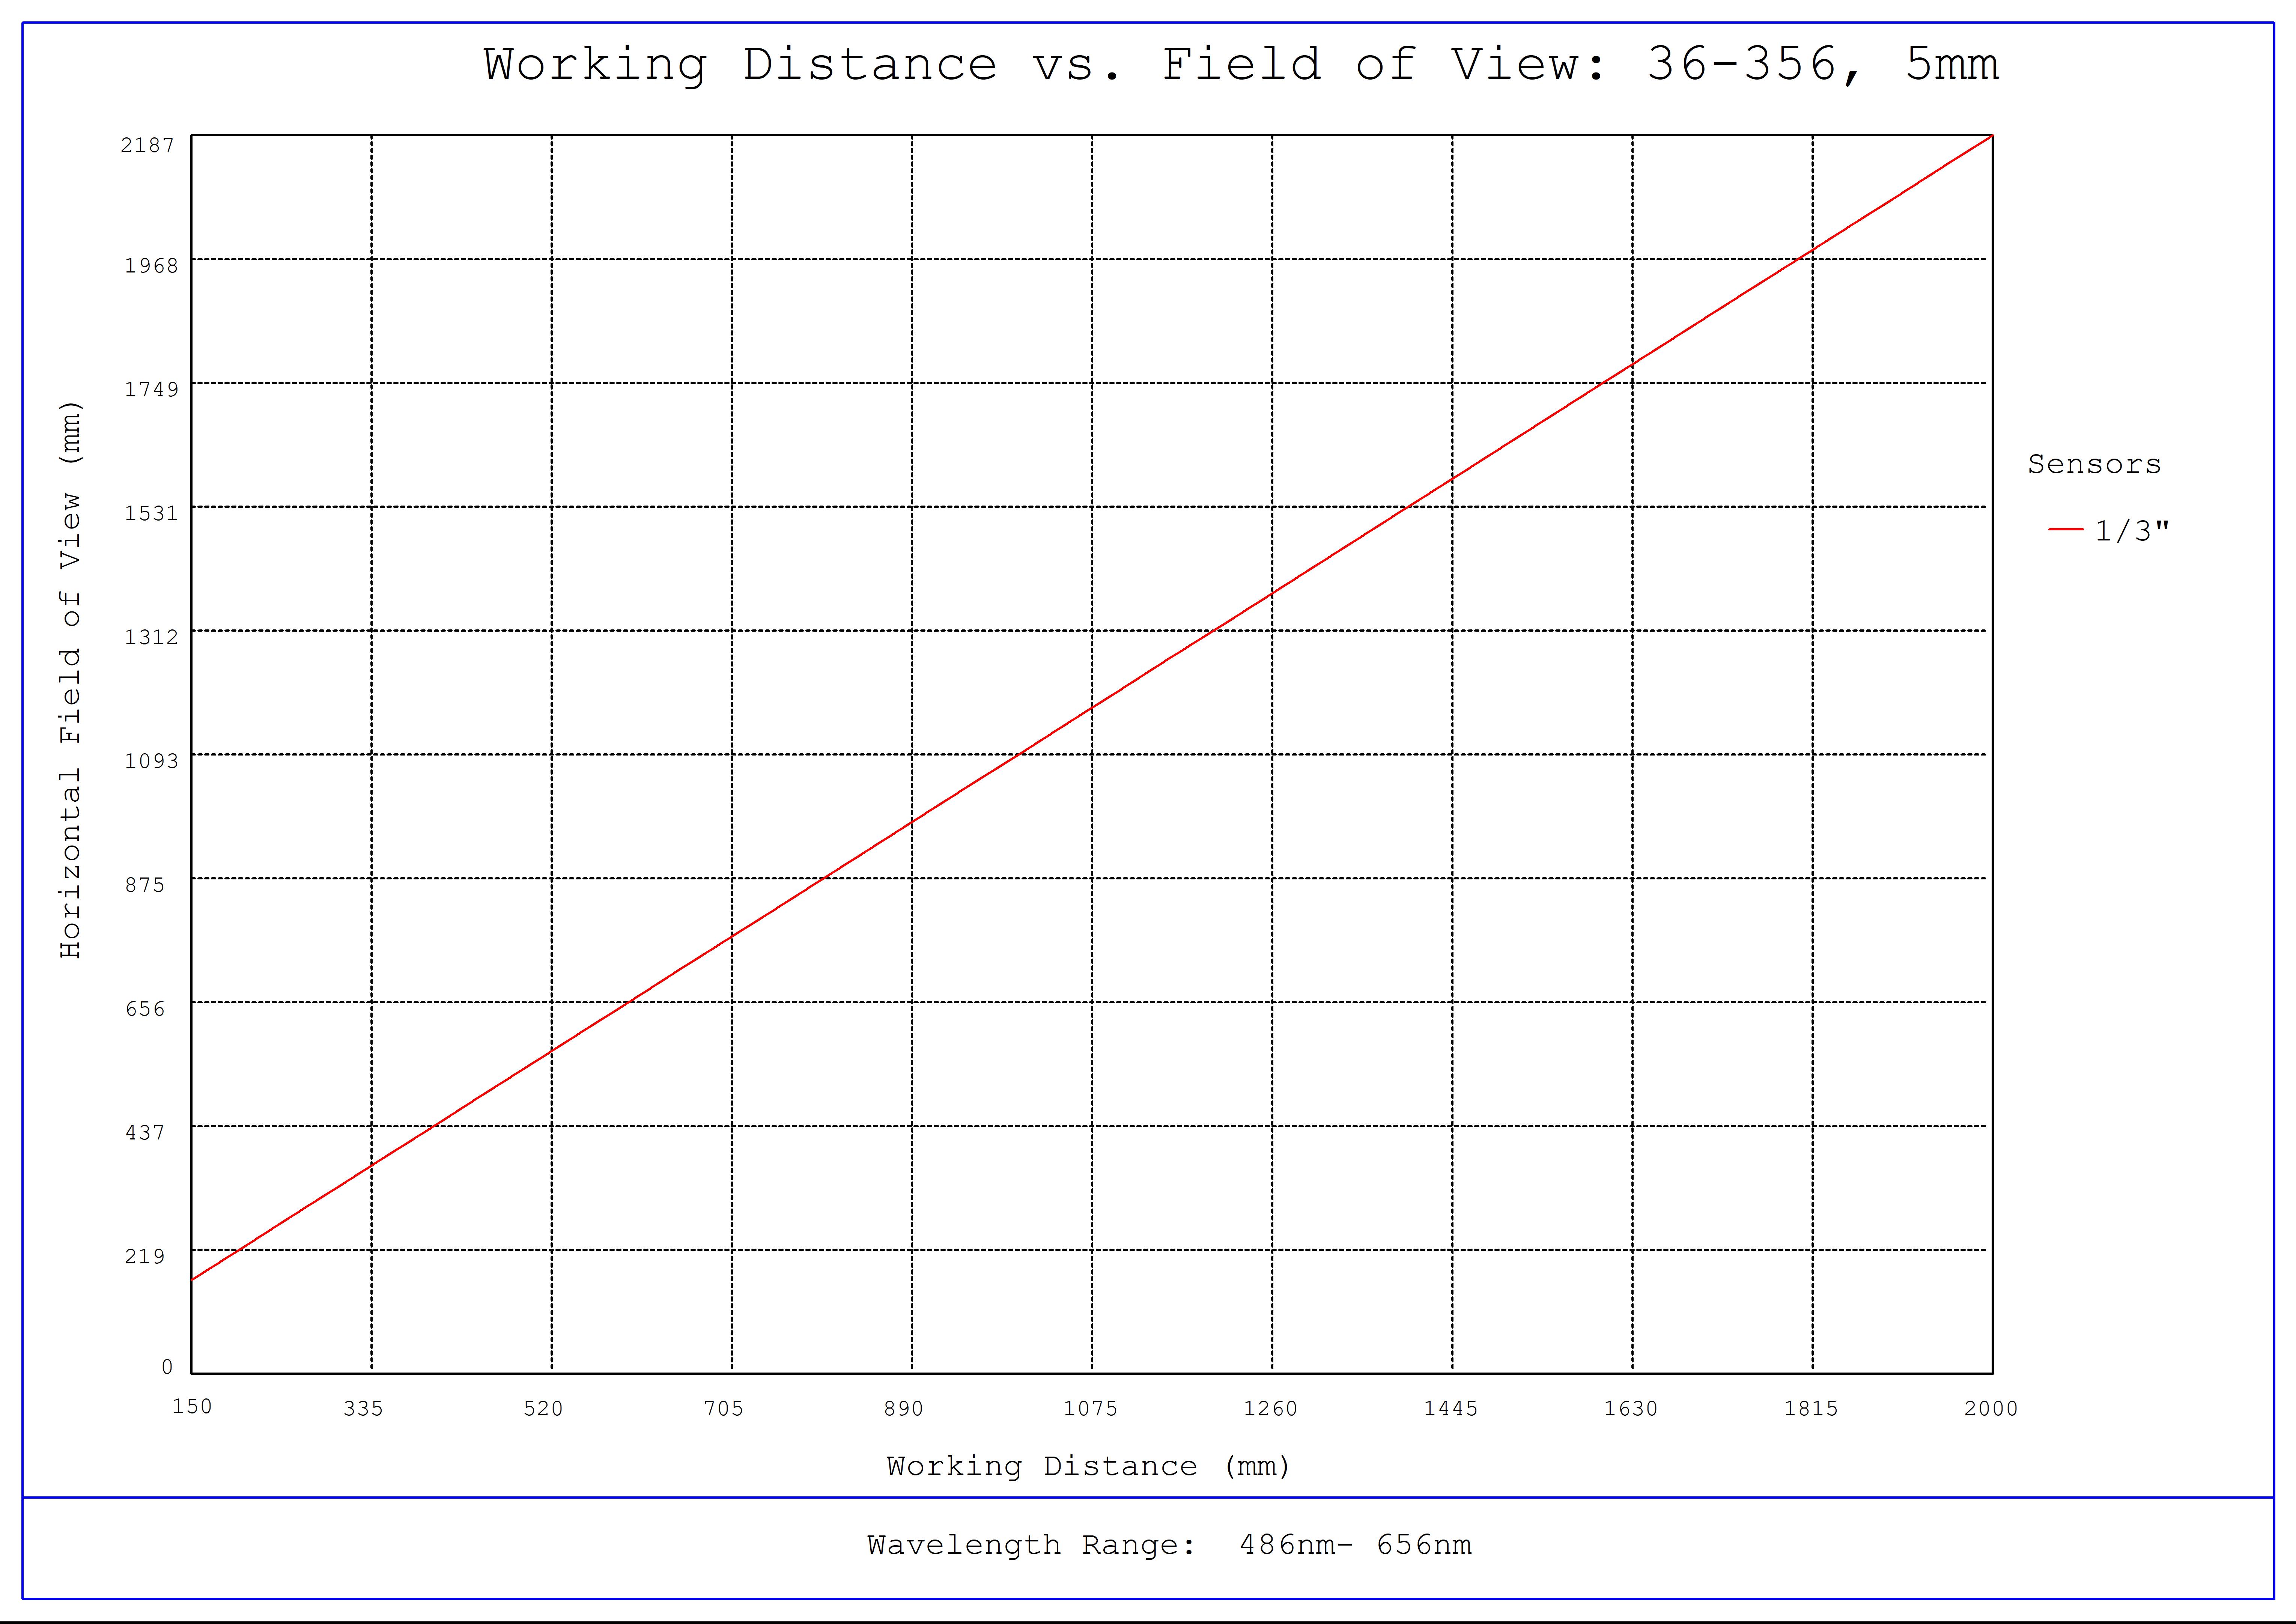 #36-356, 5mm FL f/2.5, Rugged Blue Series M12 Lens, Working Distance versus Field of View Plot